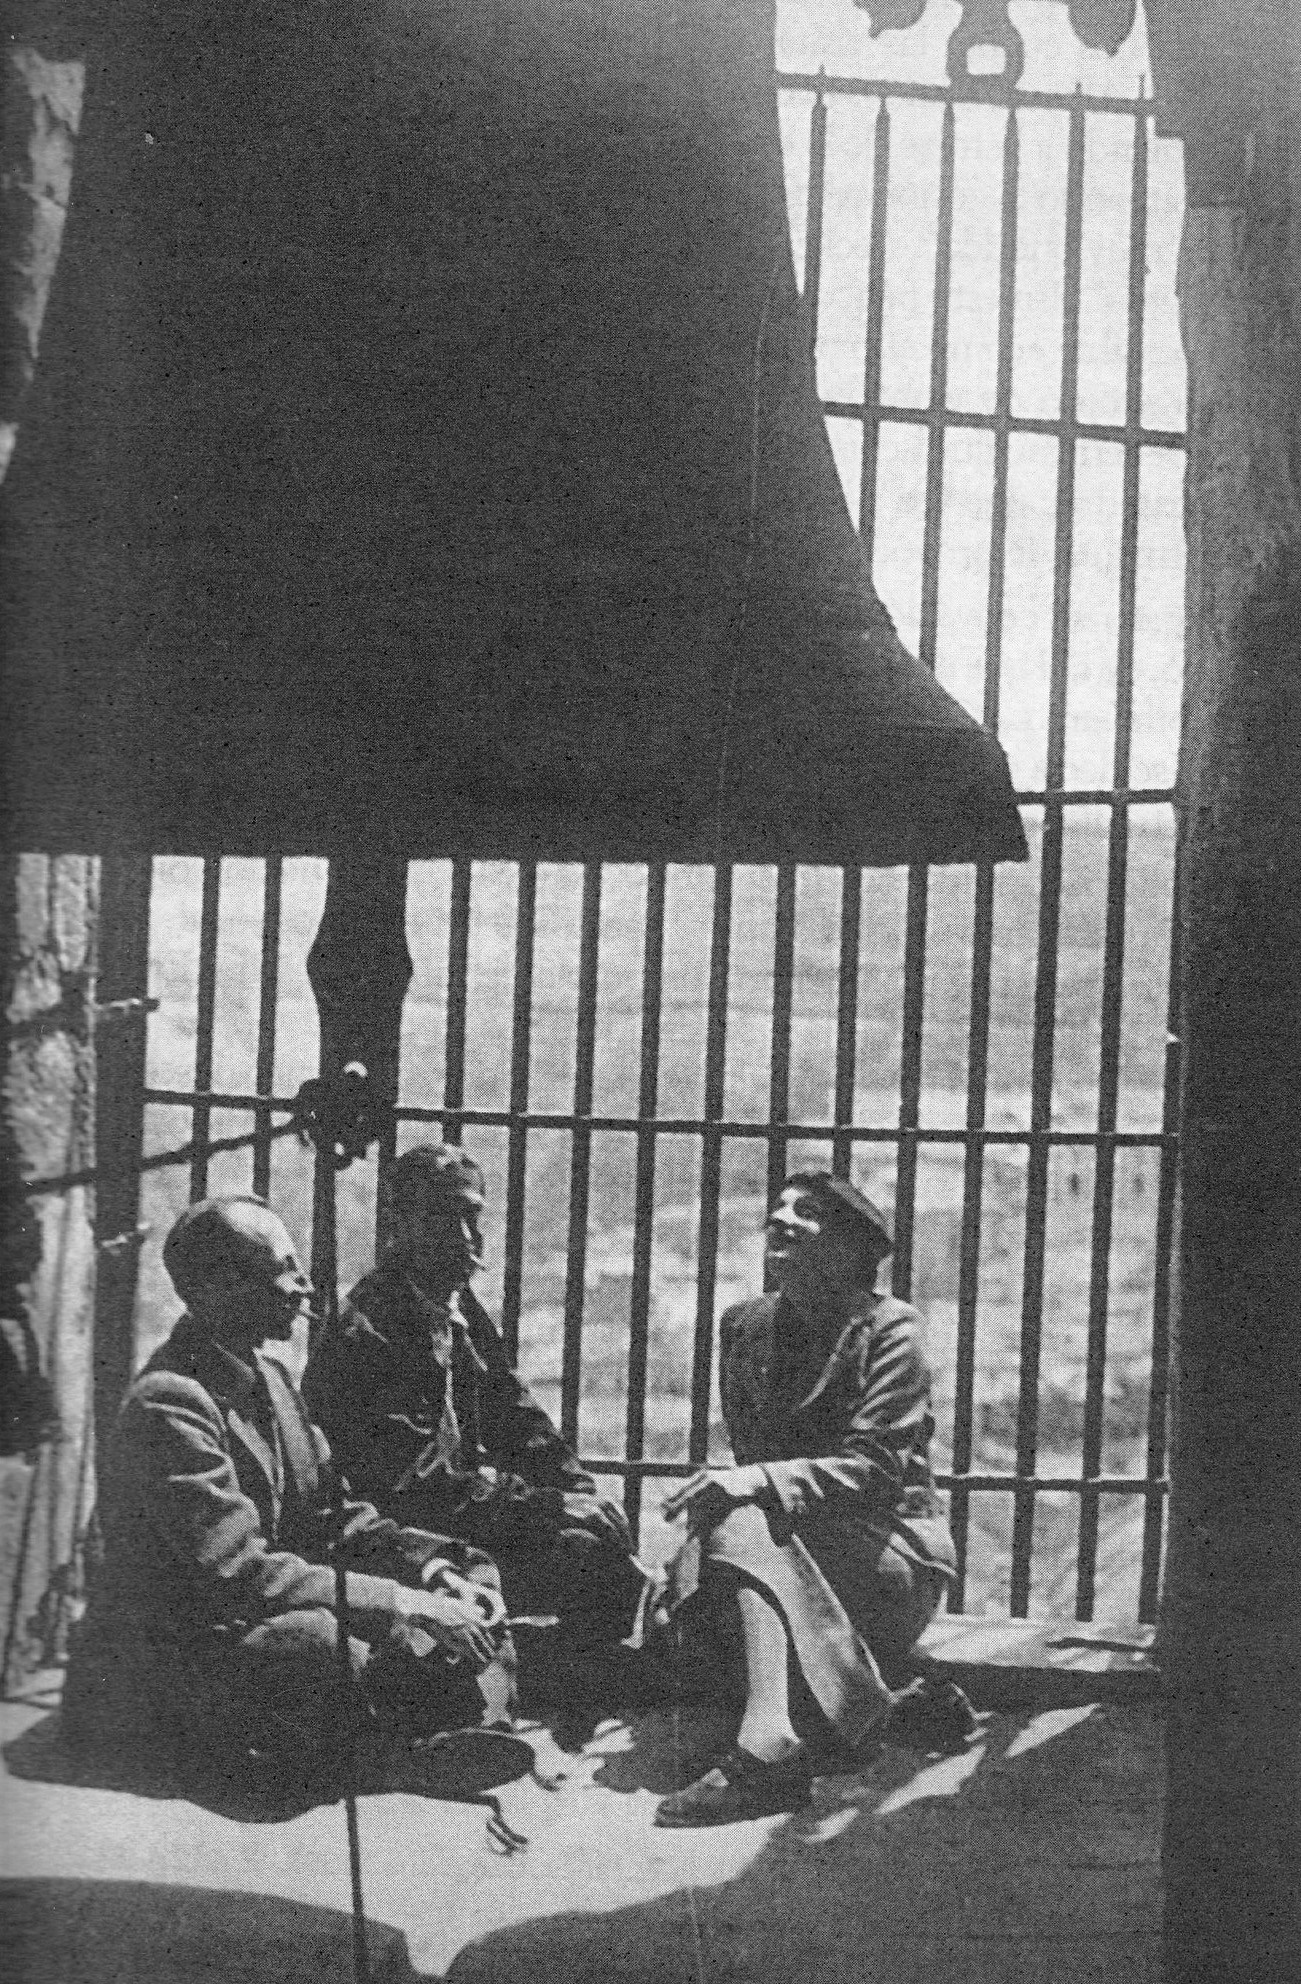 Hernando Viñes, Buñuel et Lulu Jourdan dans le clocher de la cathédrale (1936)